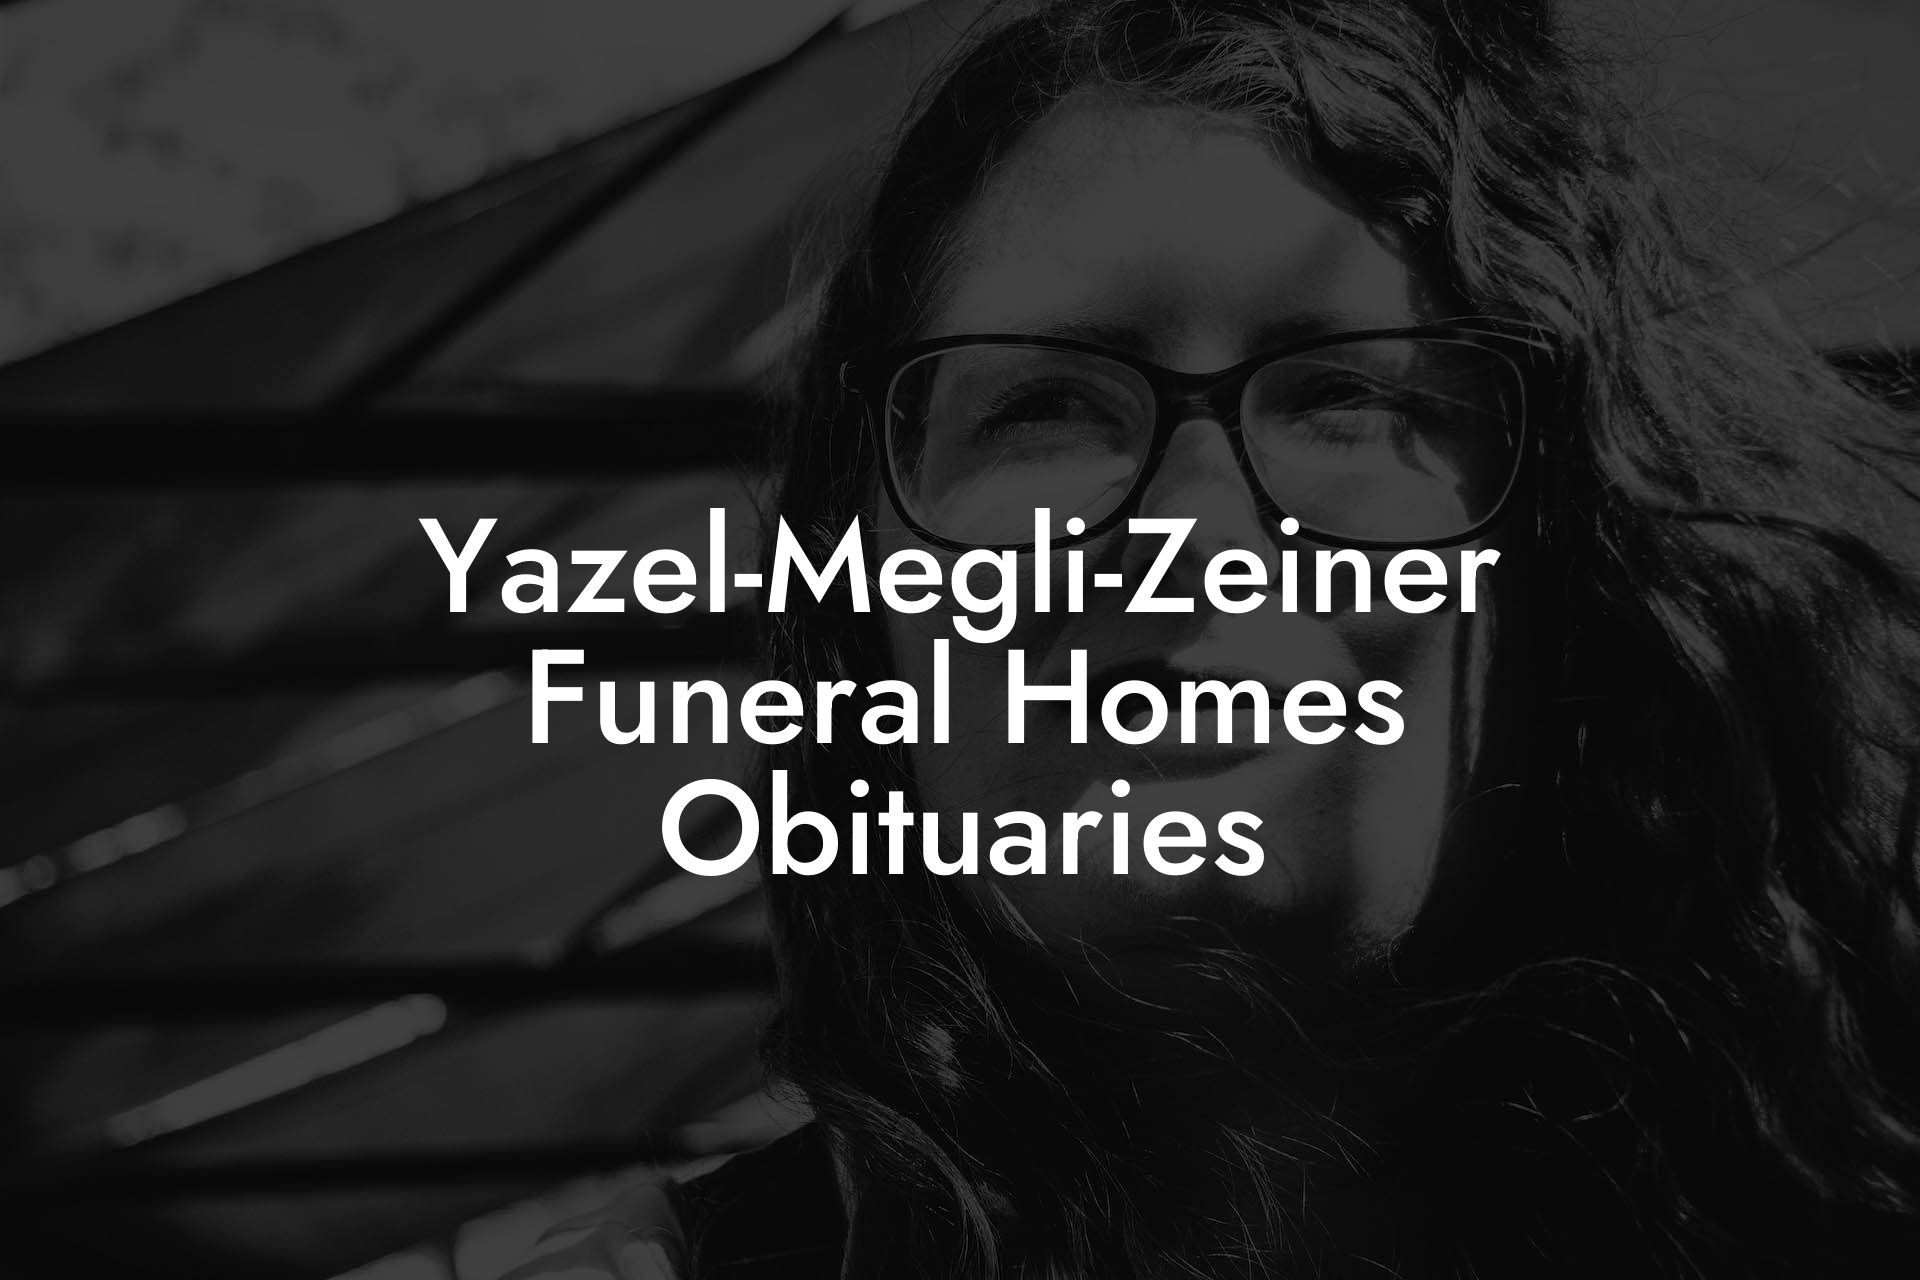 Yazel-Megli-Zeiner Funeral Homes Obituaries